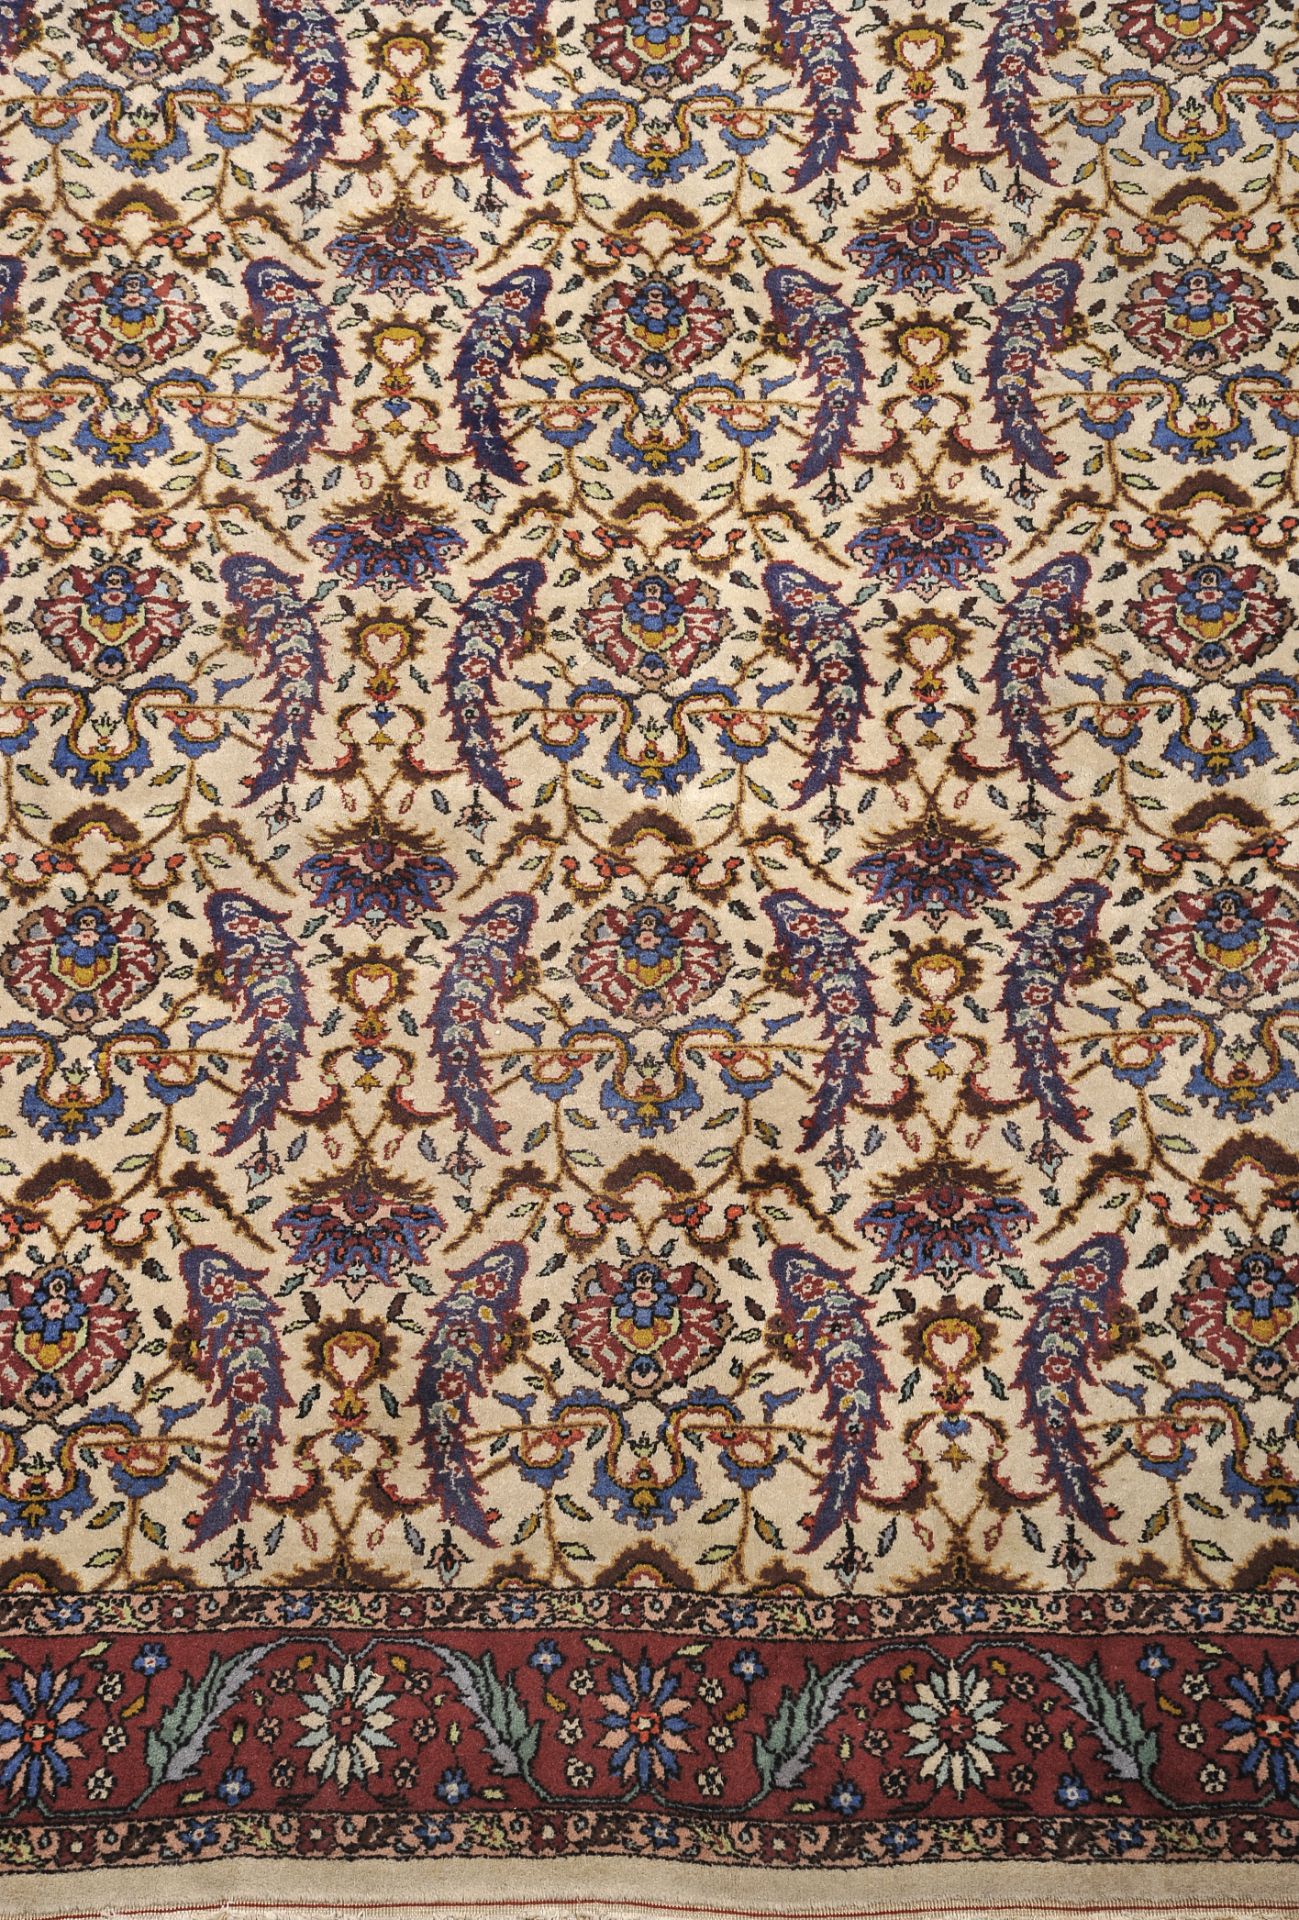 An Isparta carpet - Image 2 of 2